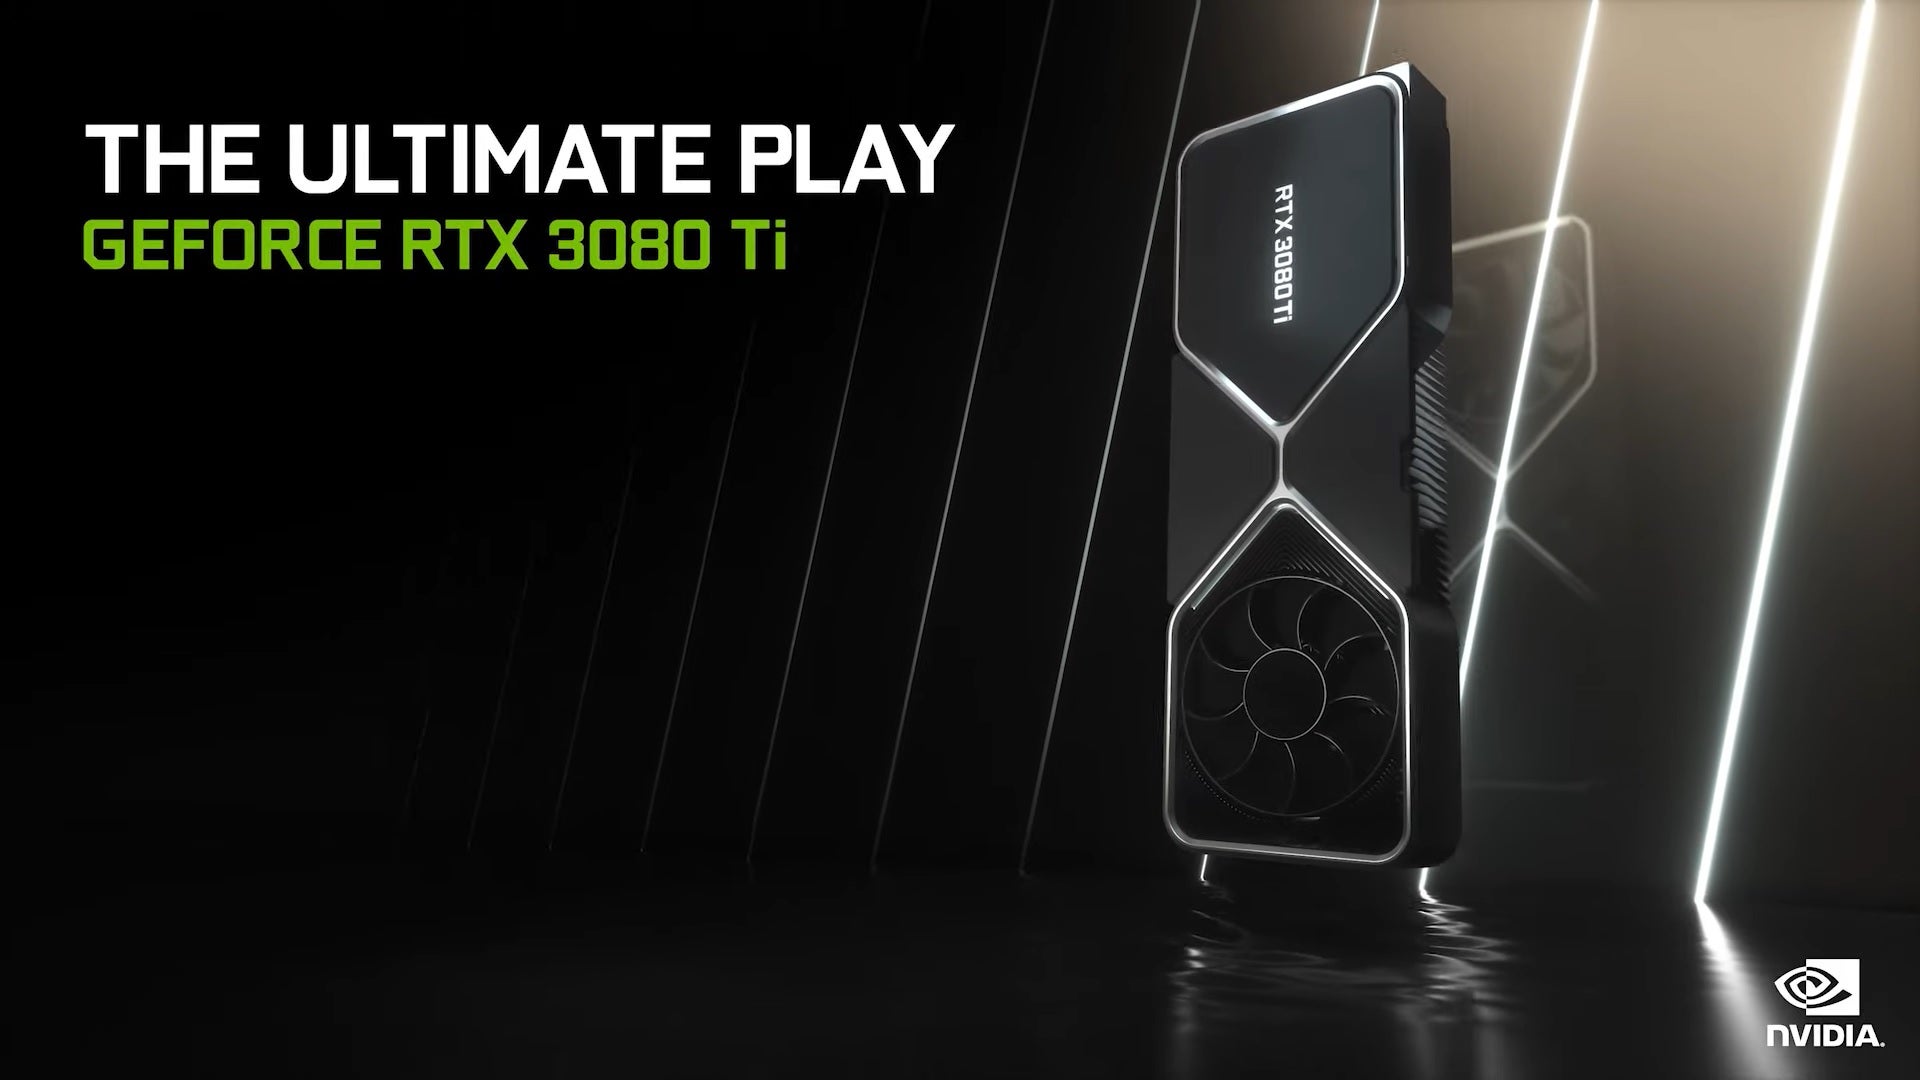 Nvidia's RTX 3080 Ti graphics card